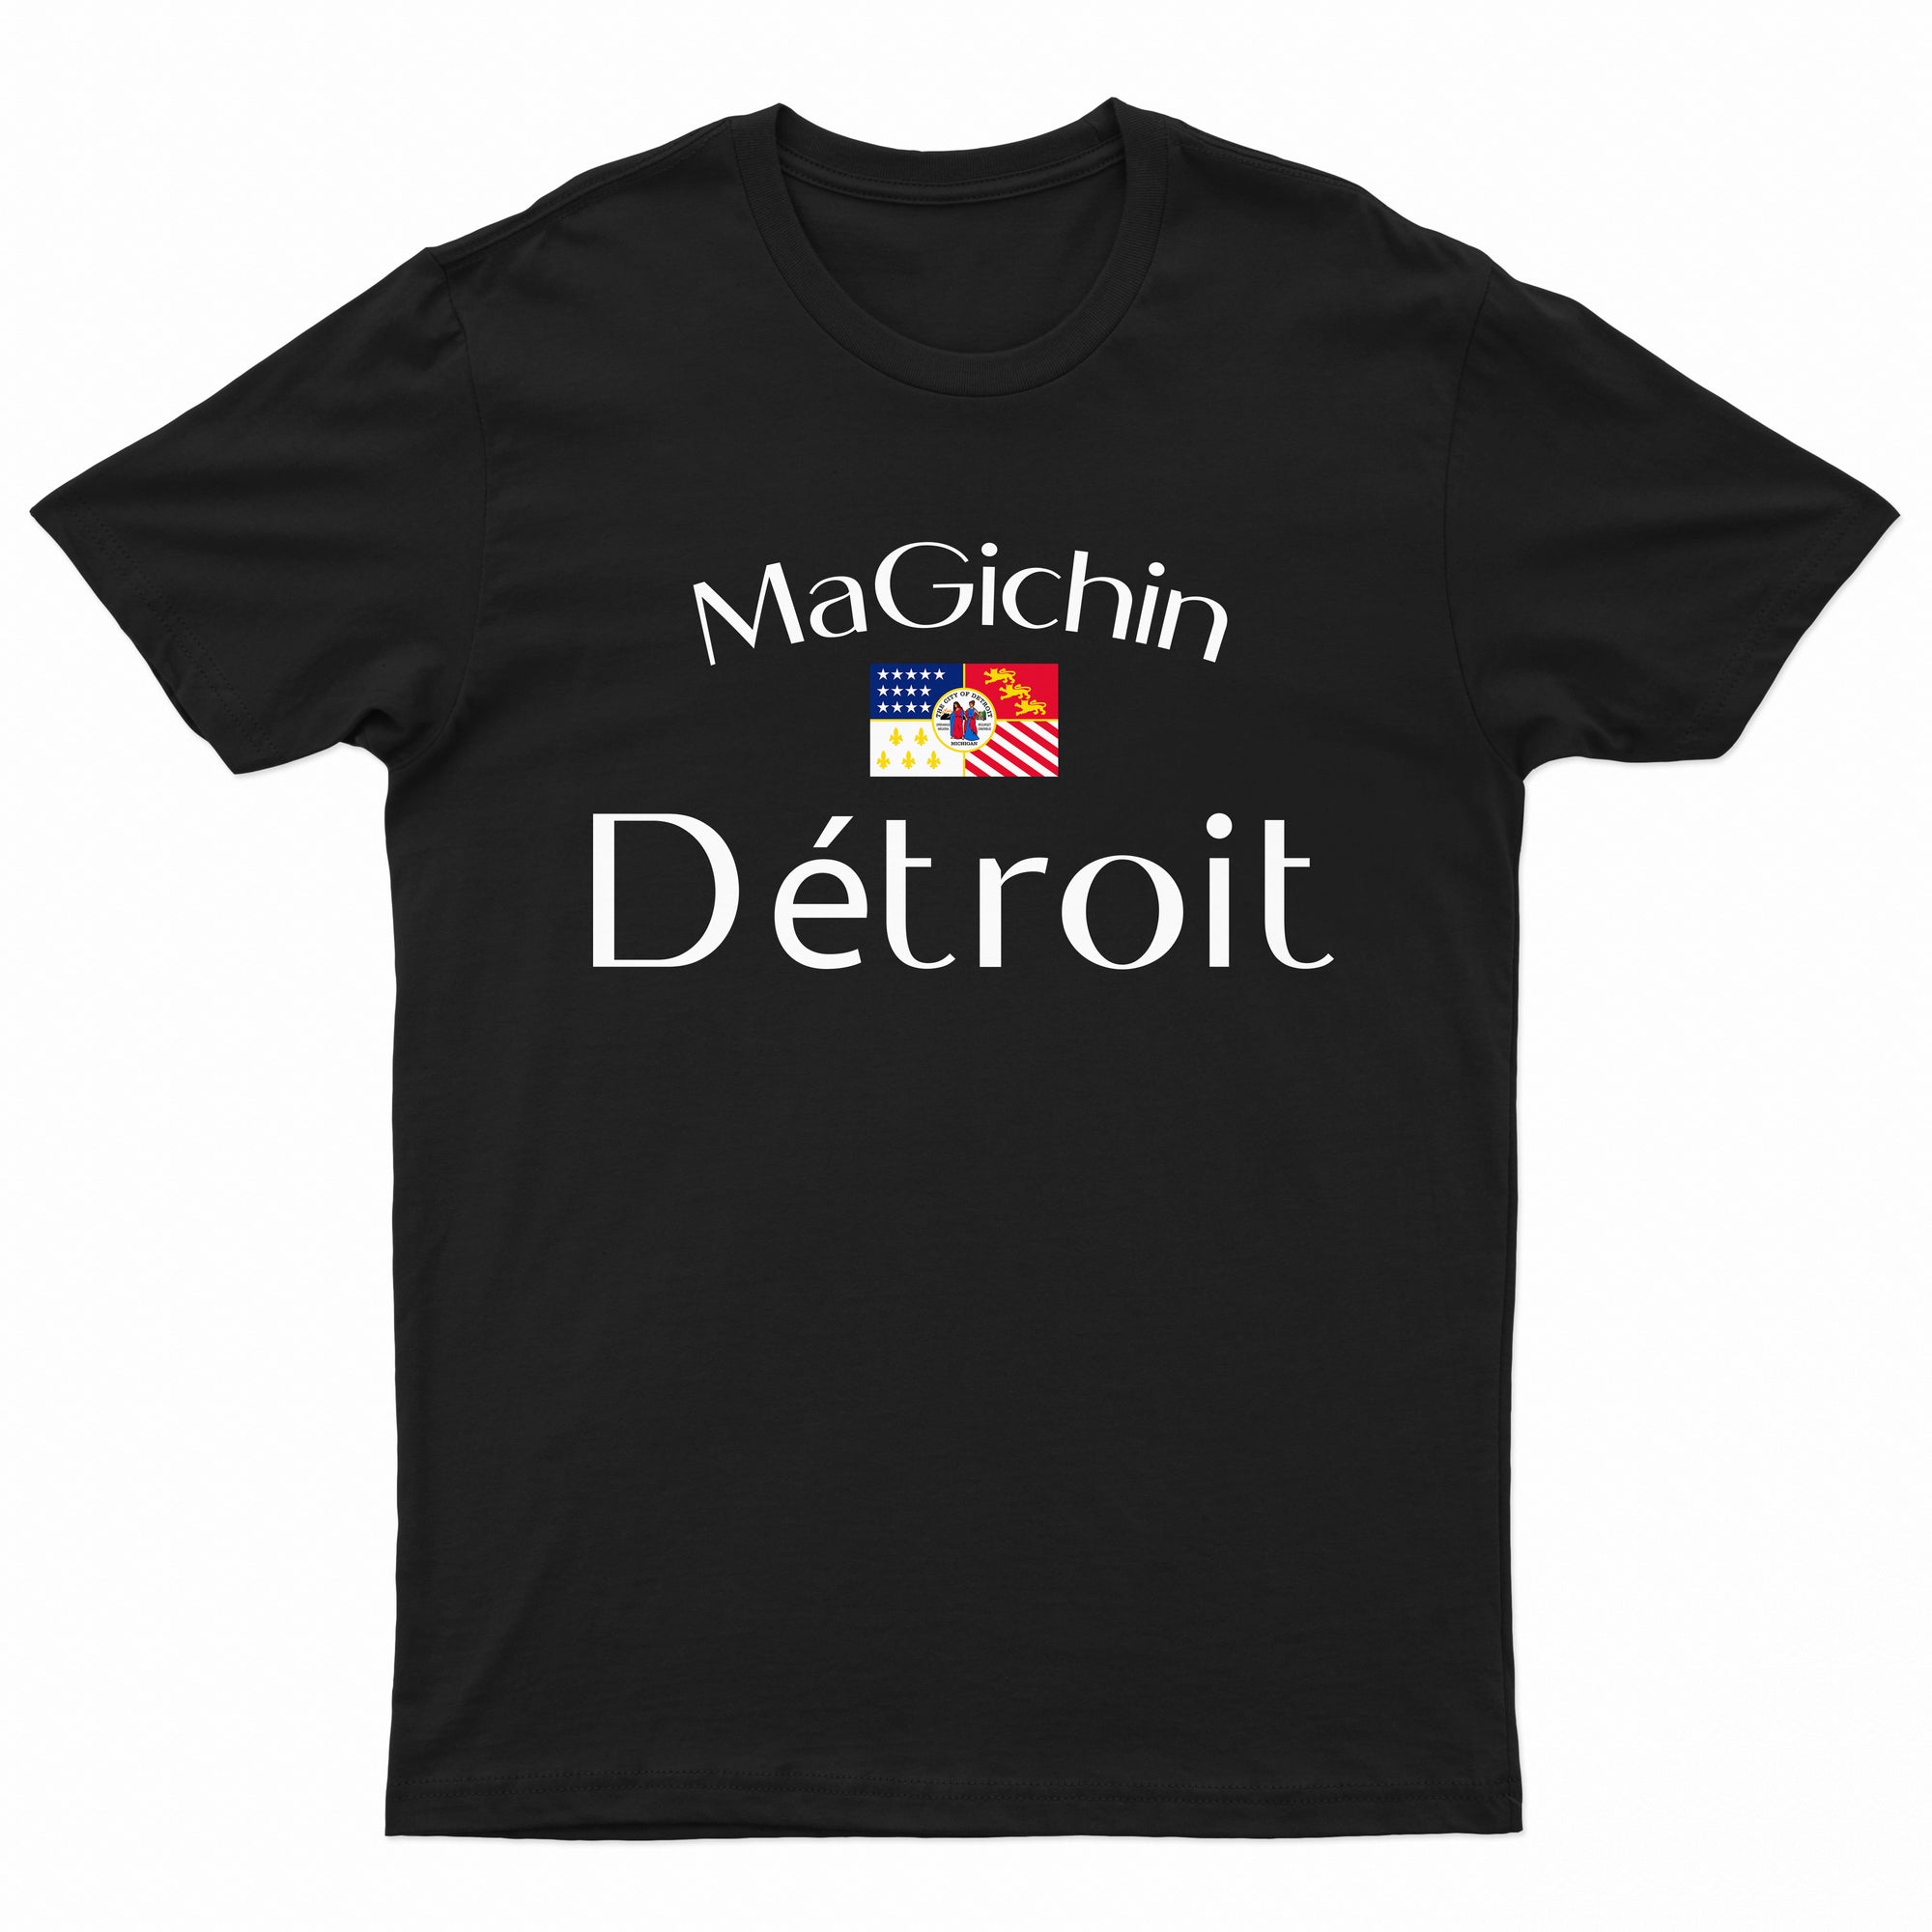 Magichinwear [DETROIT MOTTO] T-Shirt - magichinwear